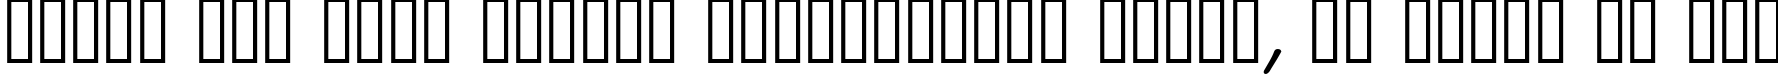 Пример написания шрифтом Manga Temple Italic текста на русском